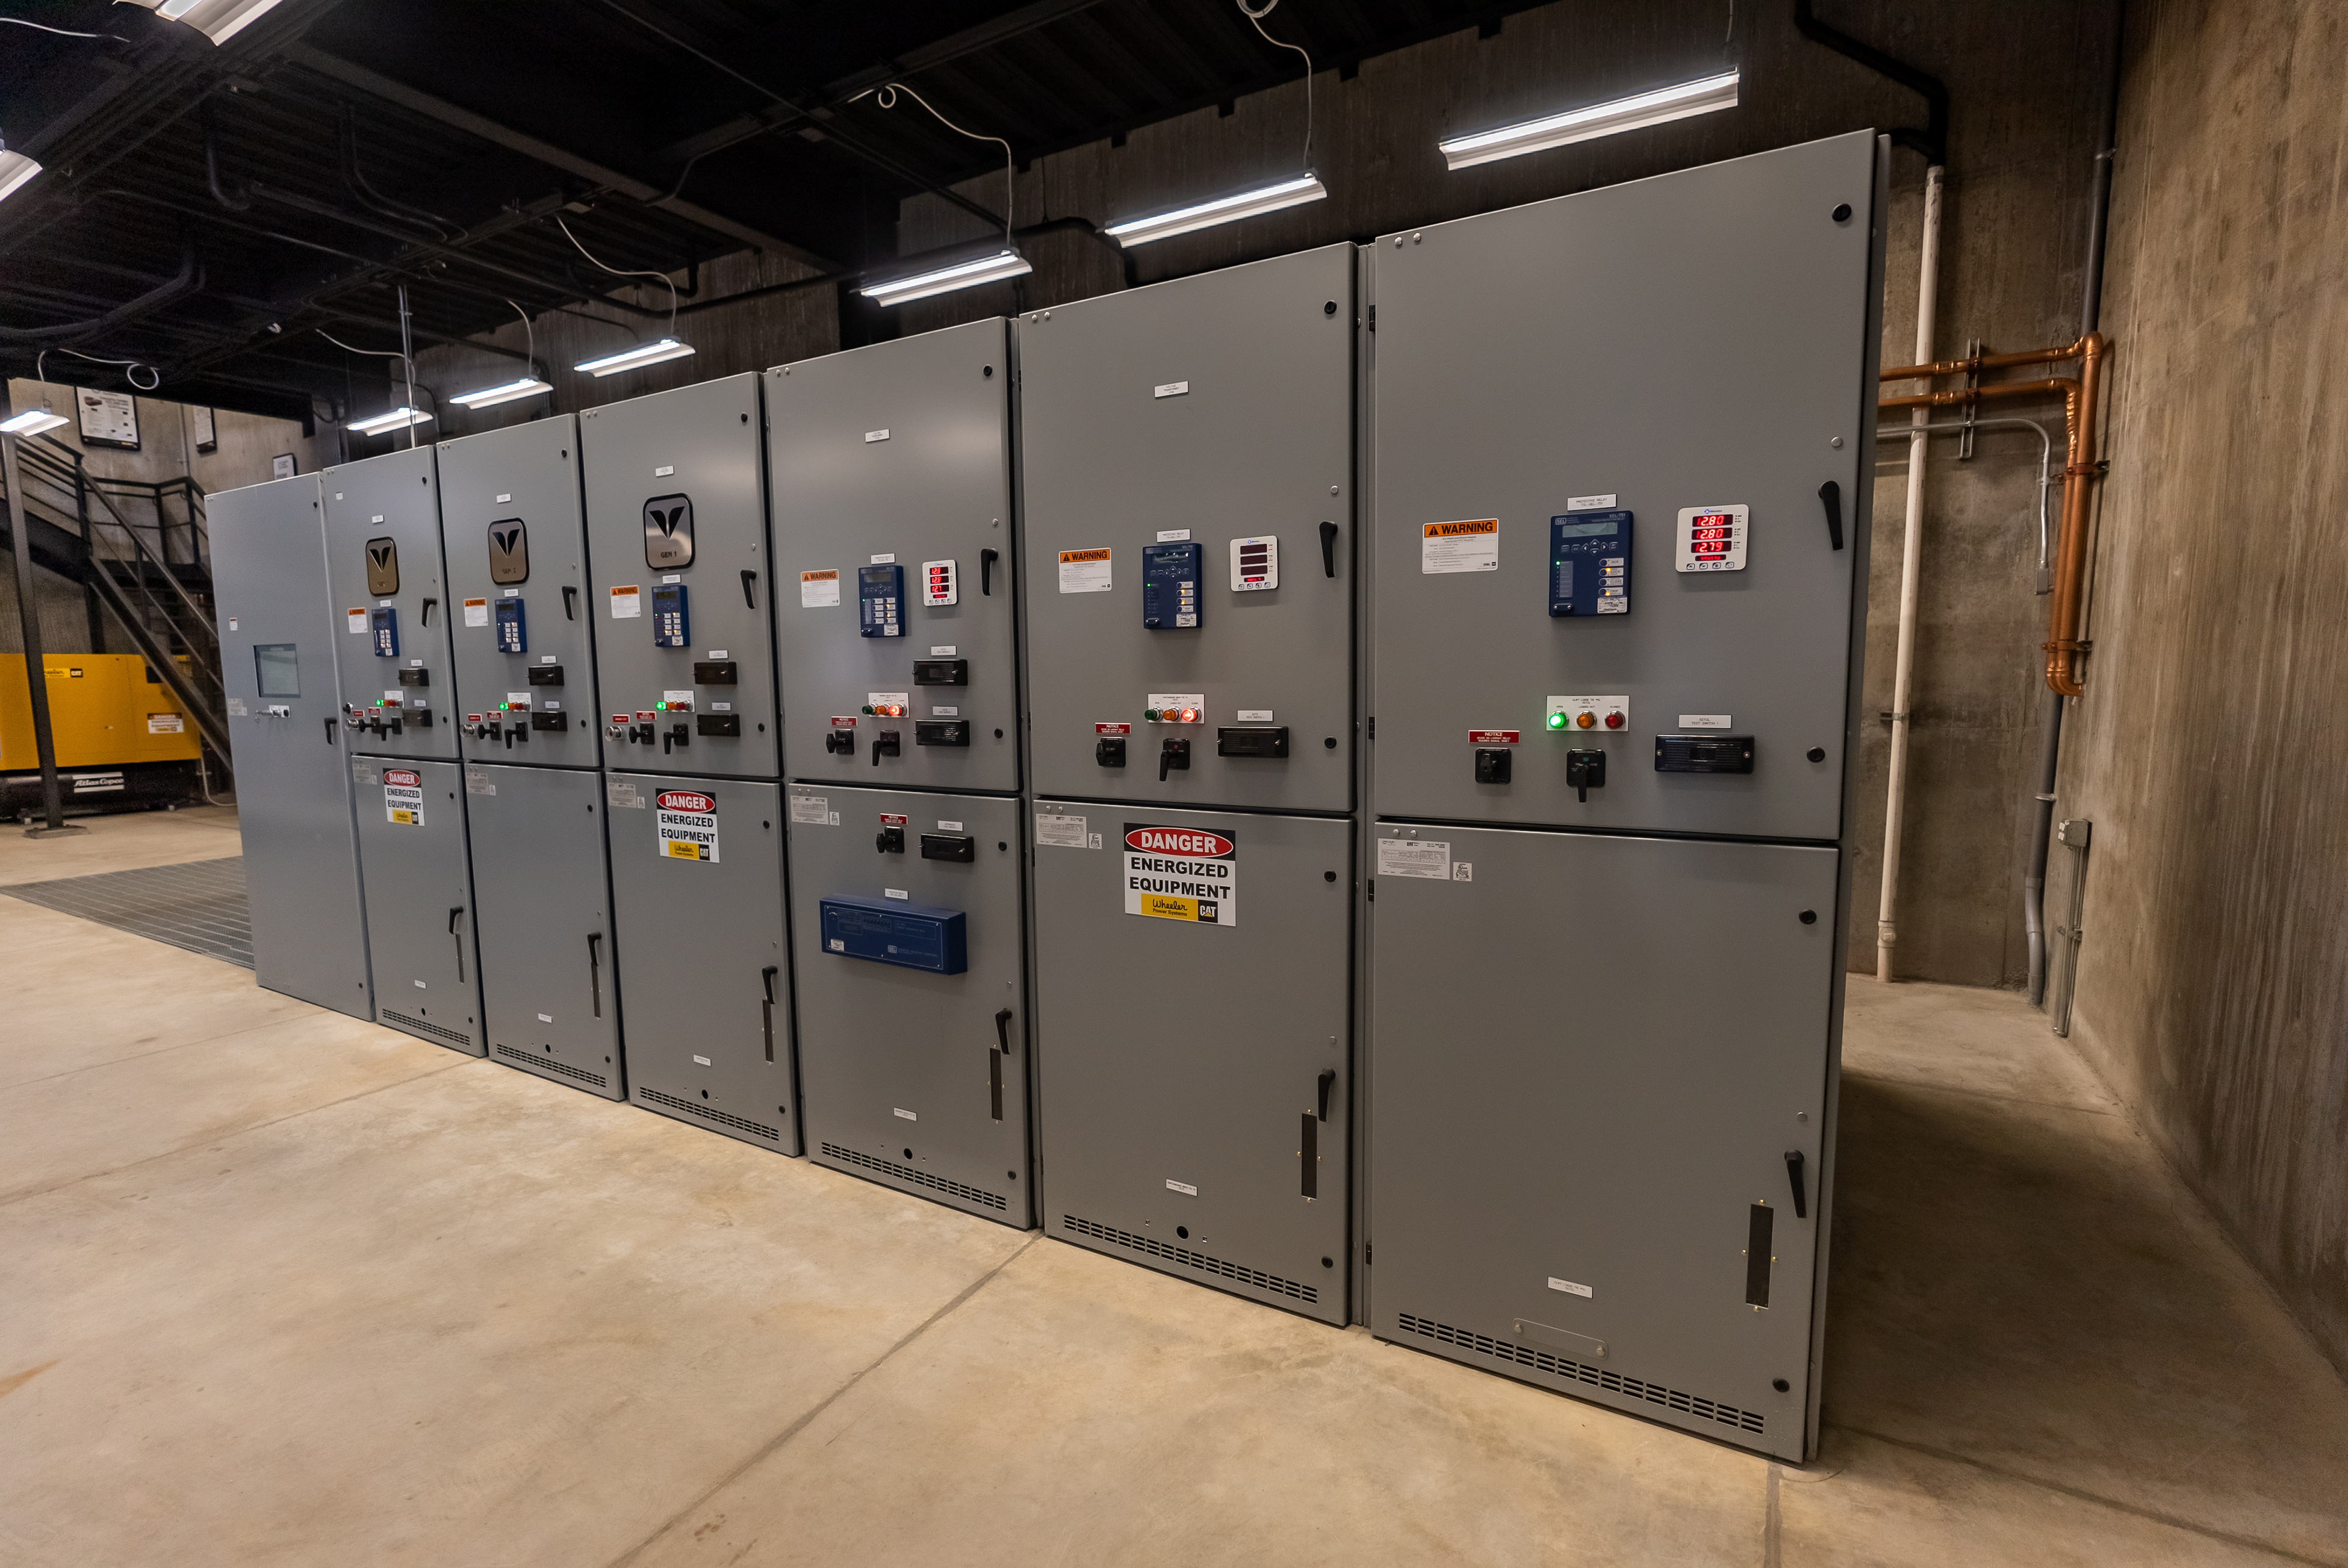 Snowbird Power Systems control systems for cogeneration plat Snowbird, UT